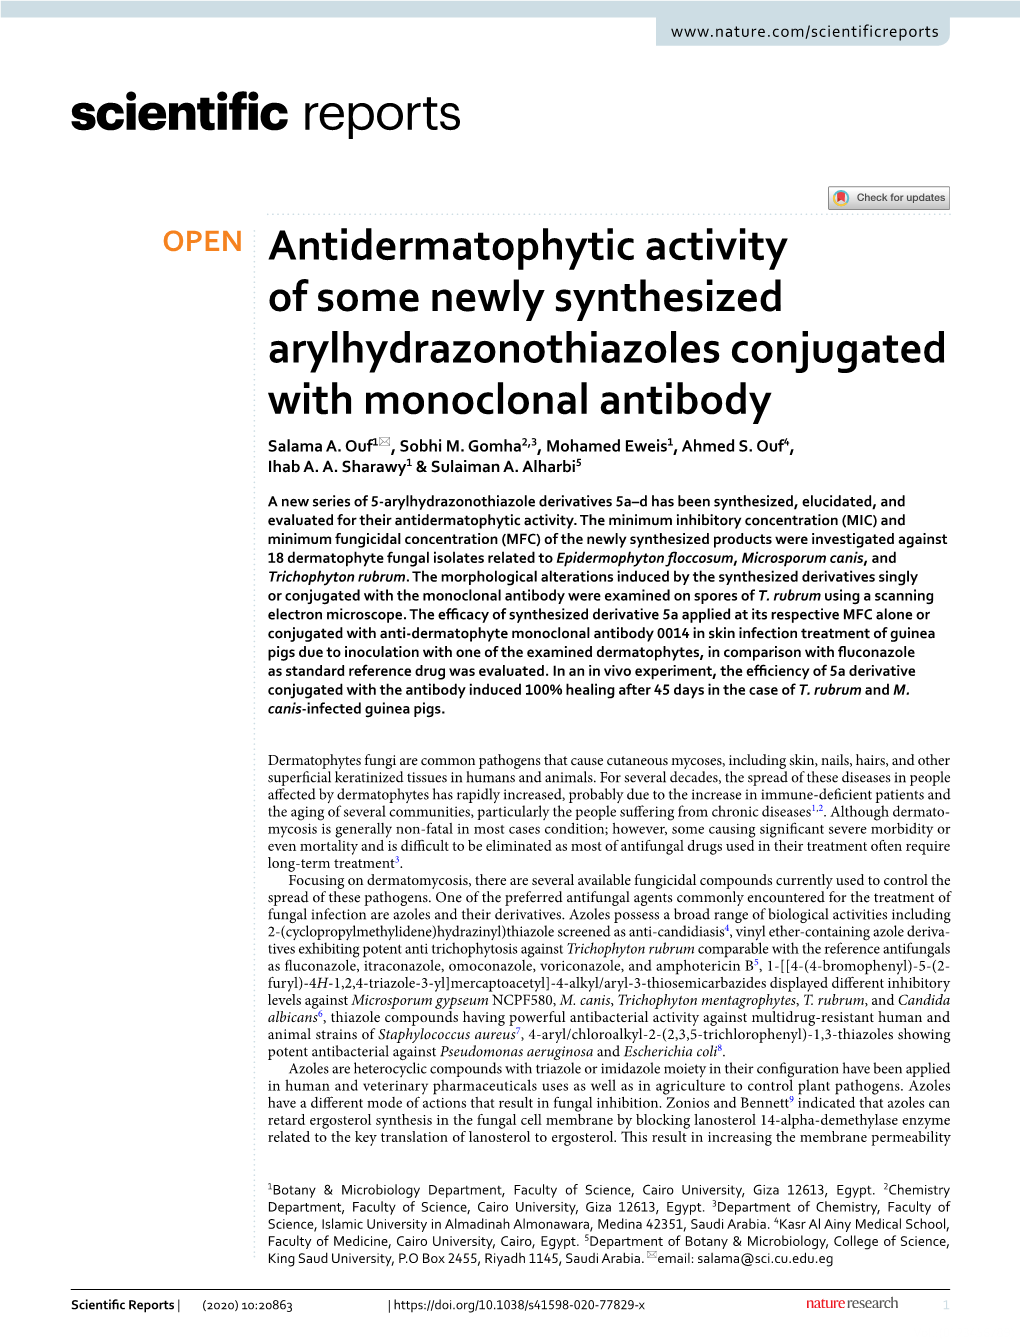 Antidermatophytic Activity of Some Newly Synthesized Arylhydrazonothiazoles Conjugated with Monoclonal Antibody Salama A